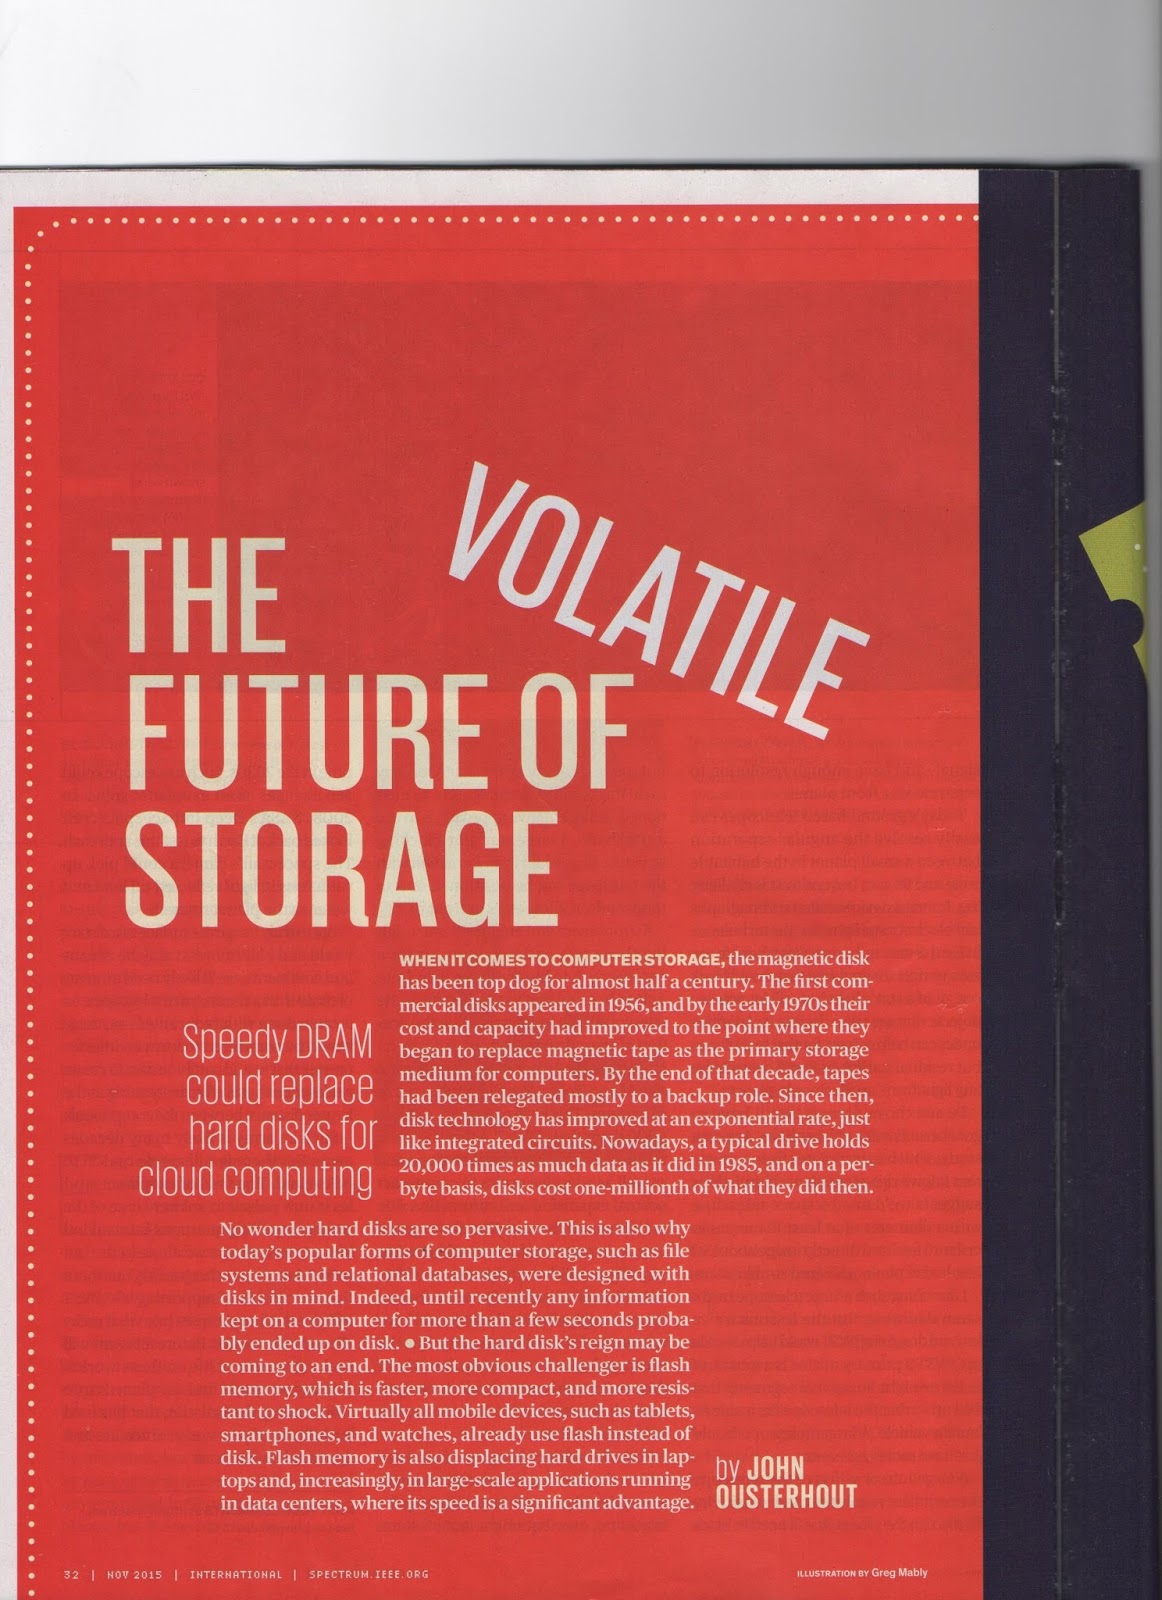 http://engineeeringcomputerworks.com/The_Future_of_Volatile_Storage.pdf